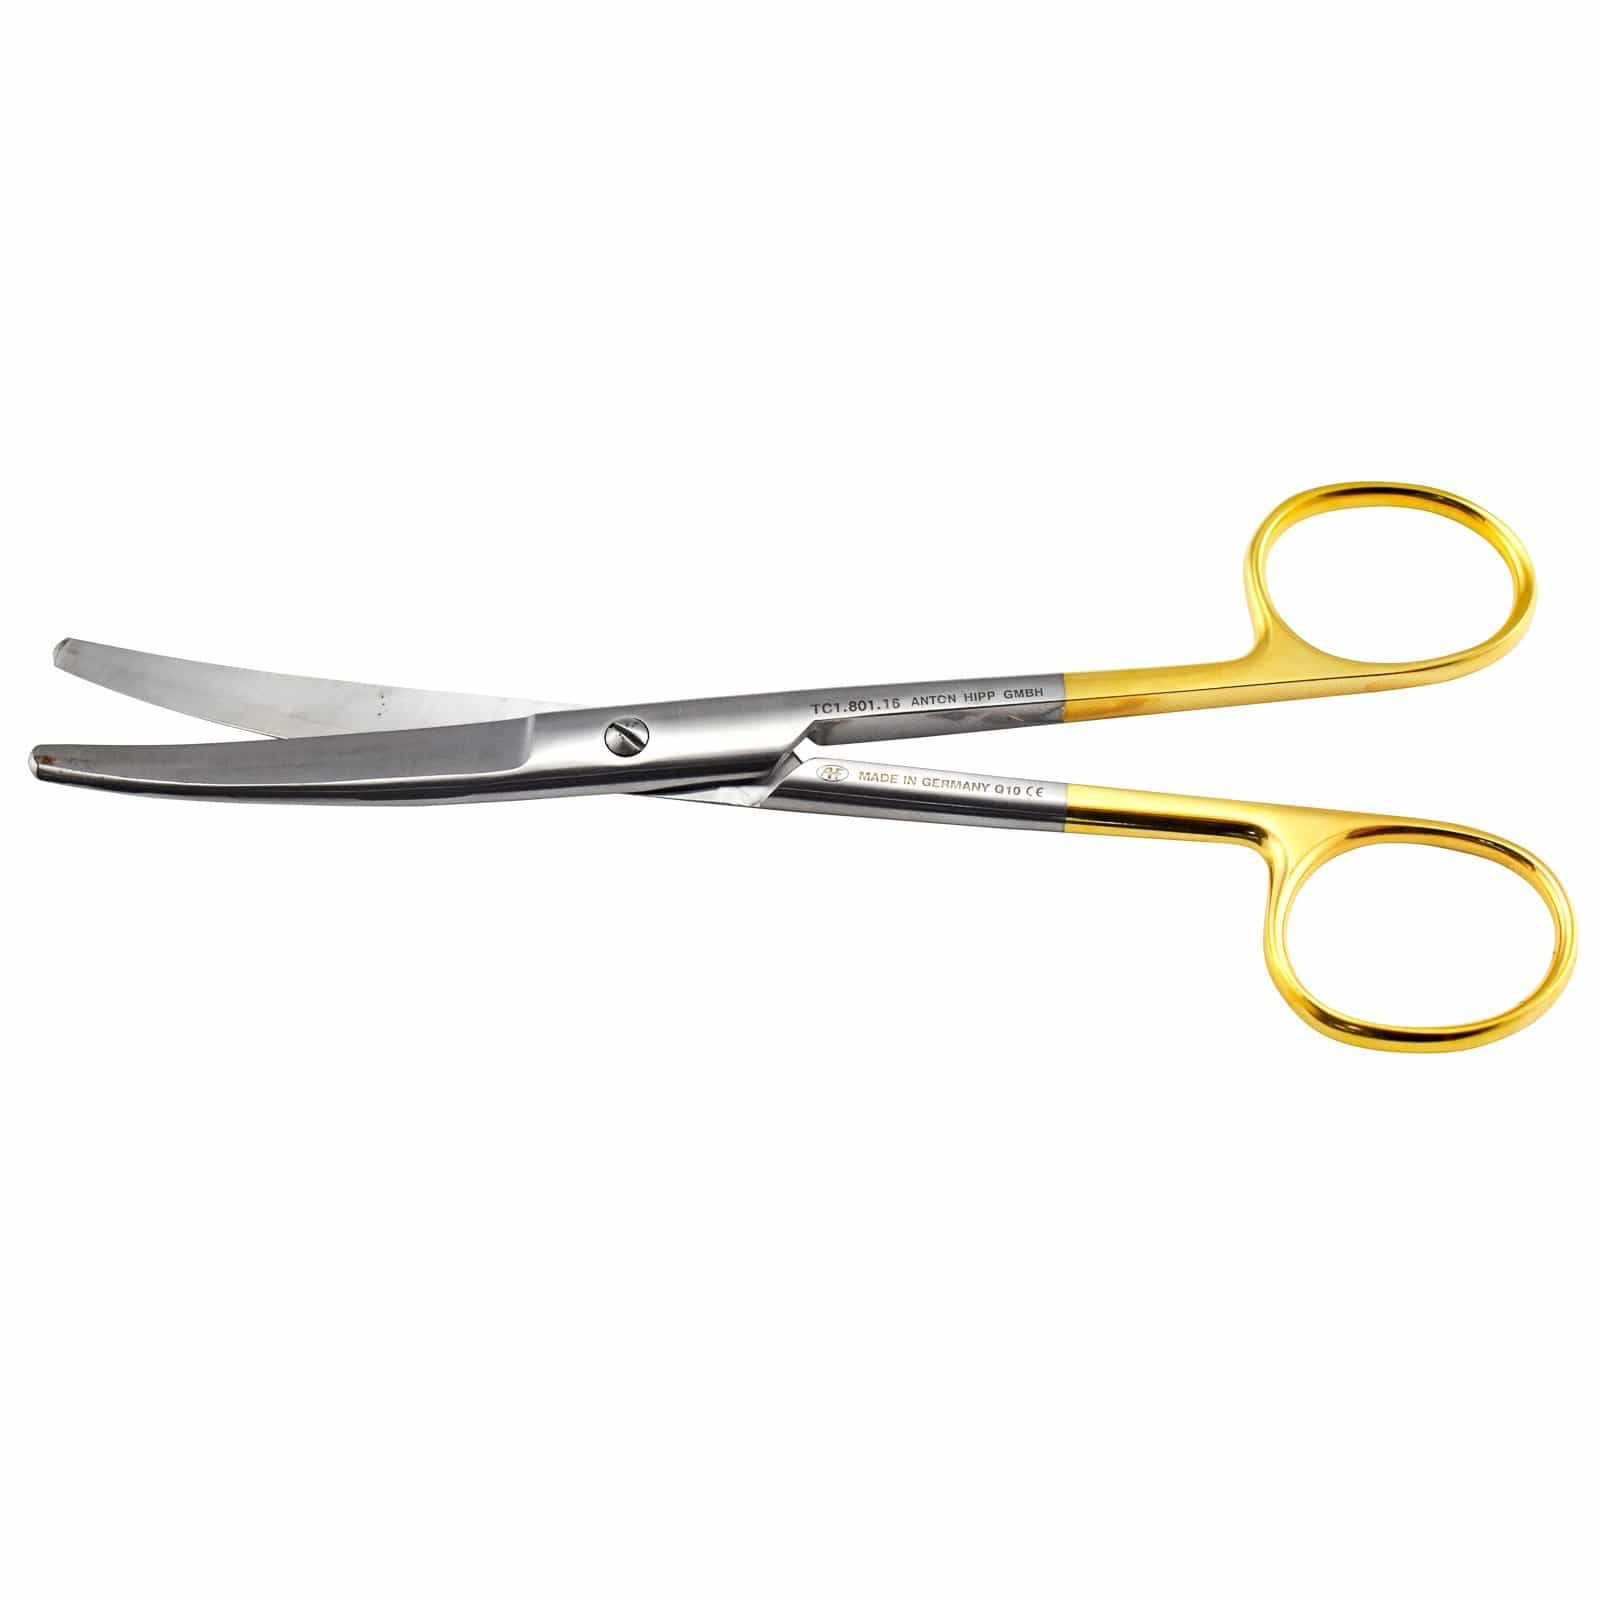 Hipp Surgical Instruments 16.5cm / Curved + TC / Blunt/Blunt Hipp Surgical Scissors